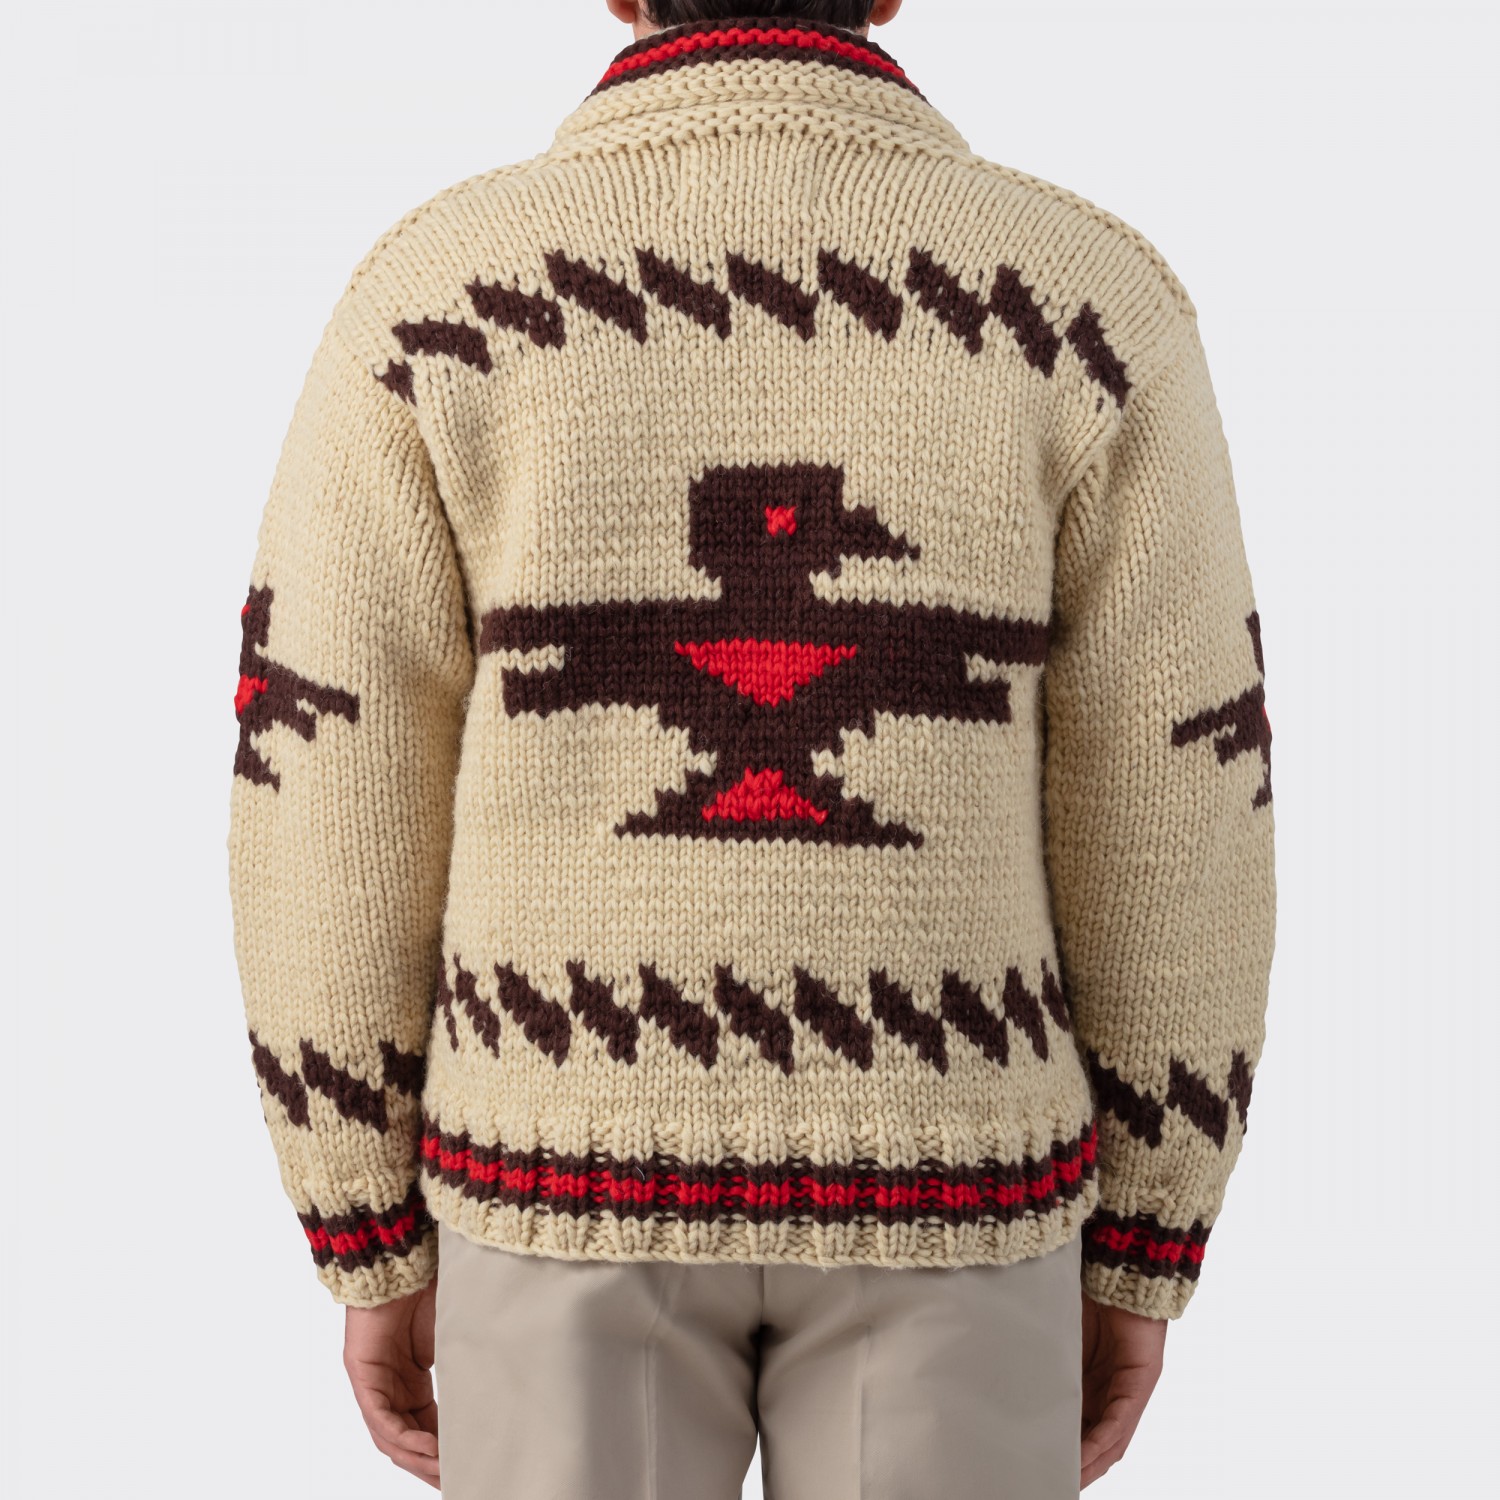 Canadian Sweater : Cowichan Sweater : Beige/Black/Red